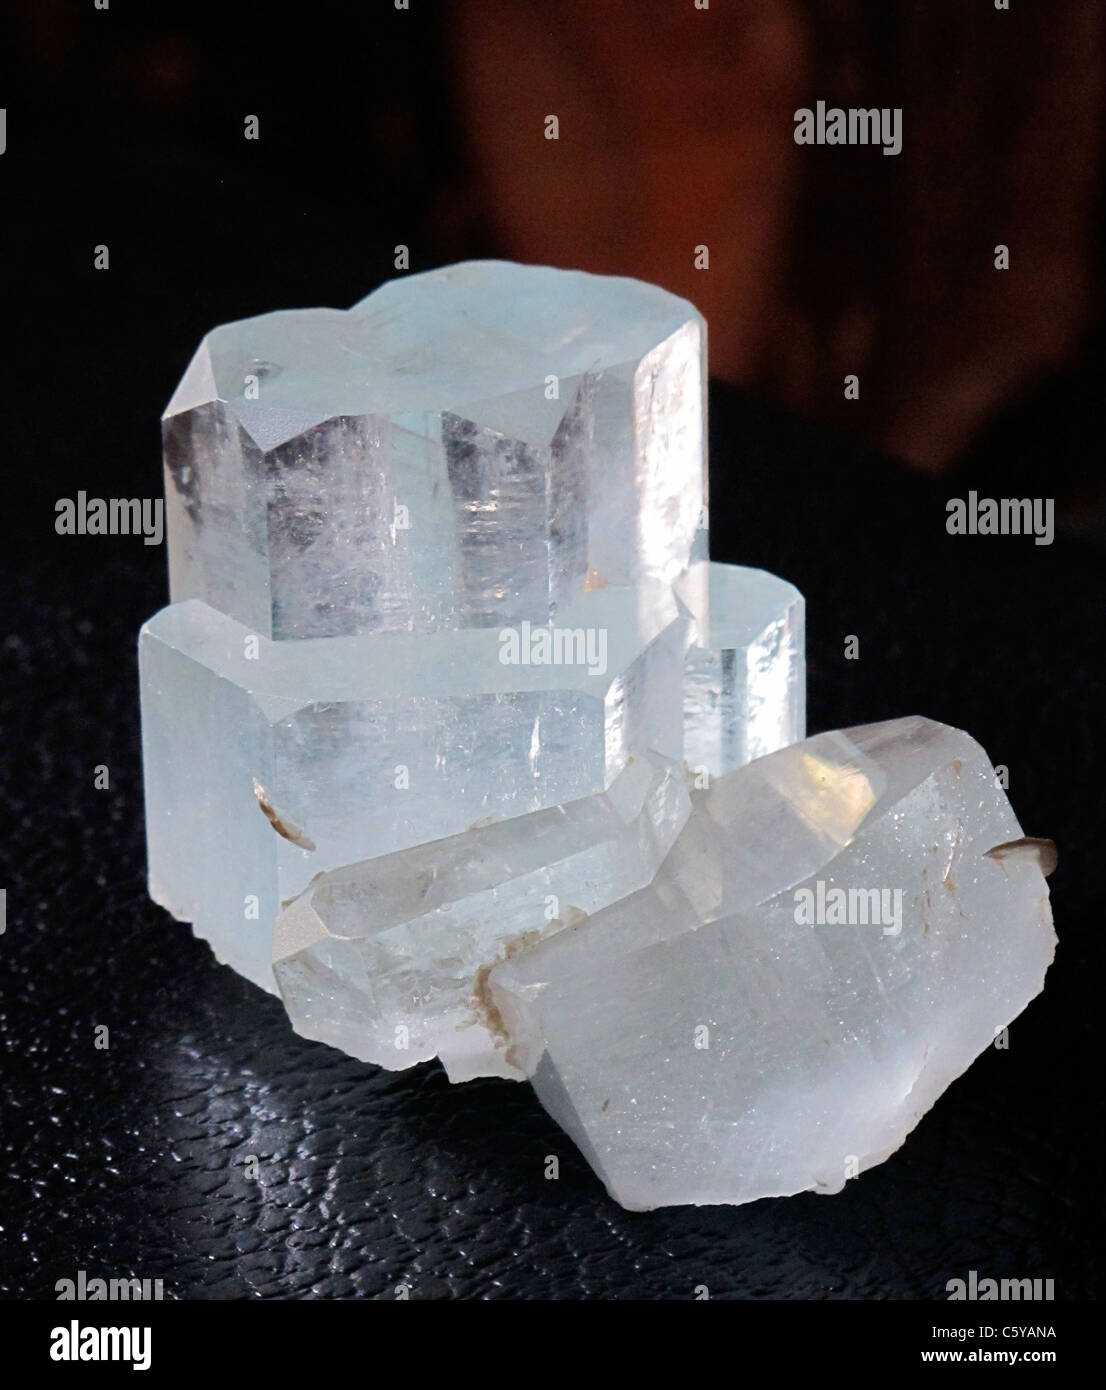 Aquamarine Crystal Formation from Pakistan, the precious blue Beryl gem.  Gemology, jewelry interest Stock Photo - Alamy